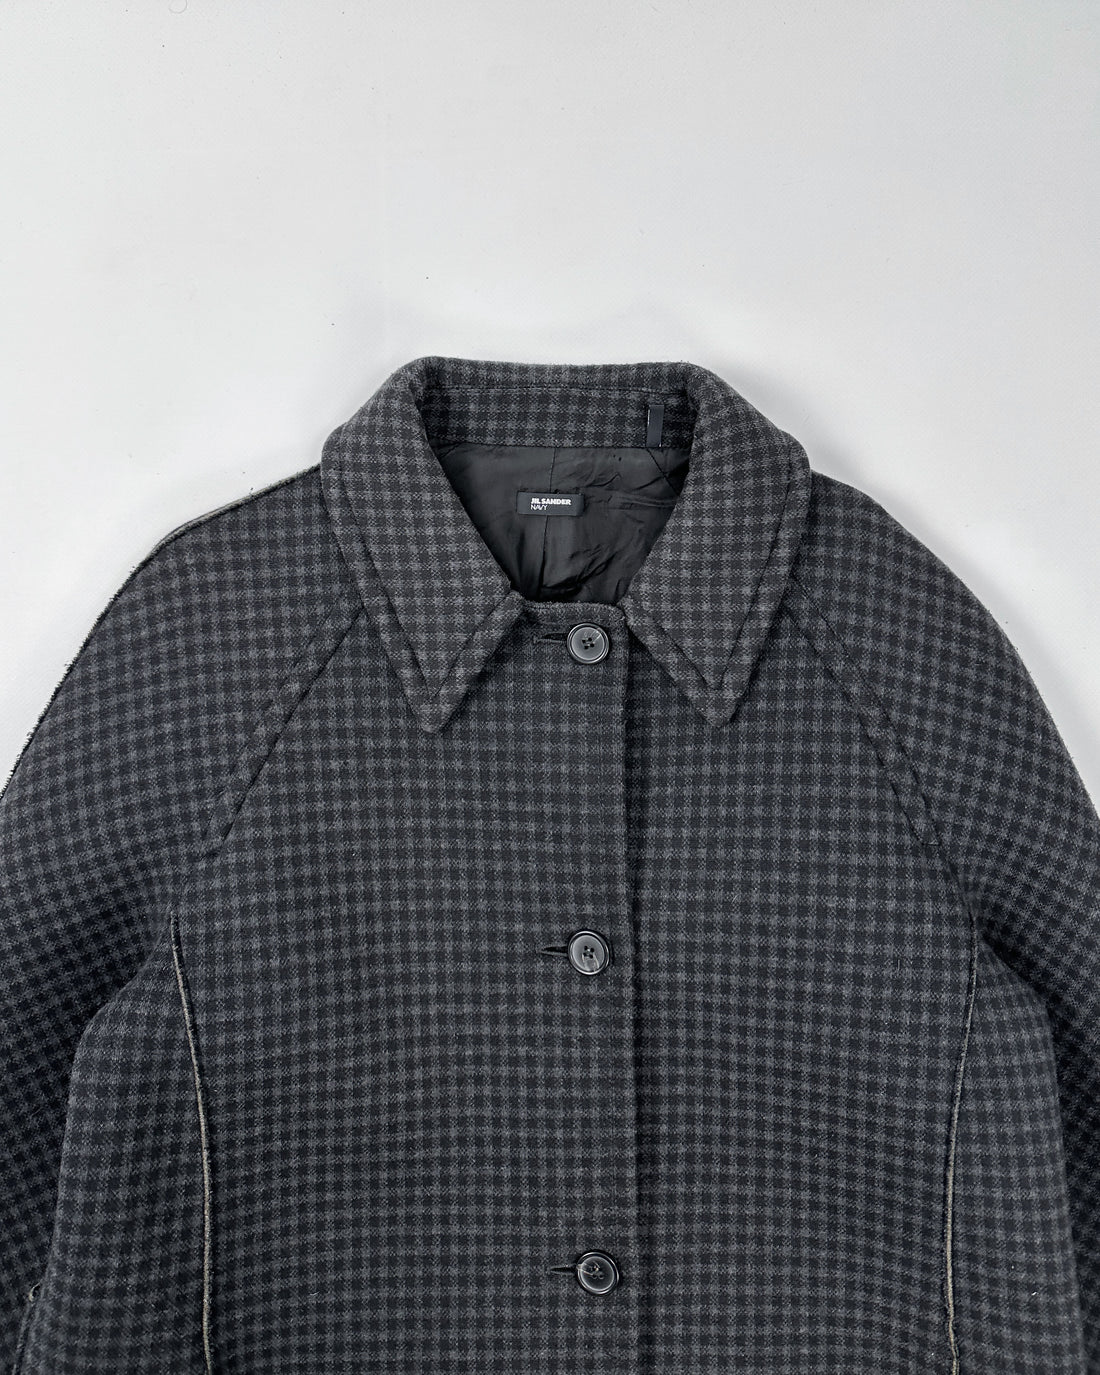 Jil Sander Checkered Dark Grey Long Coat 2000's